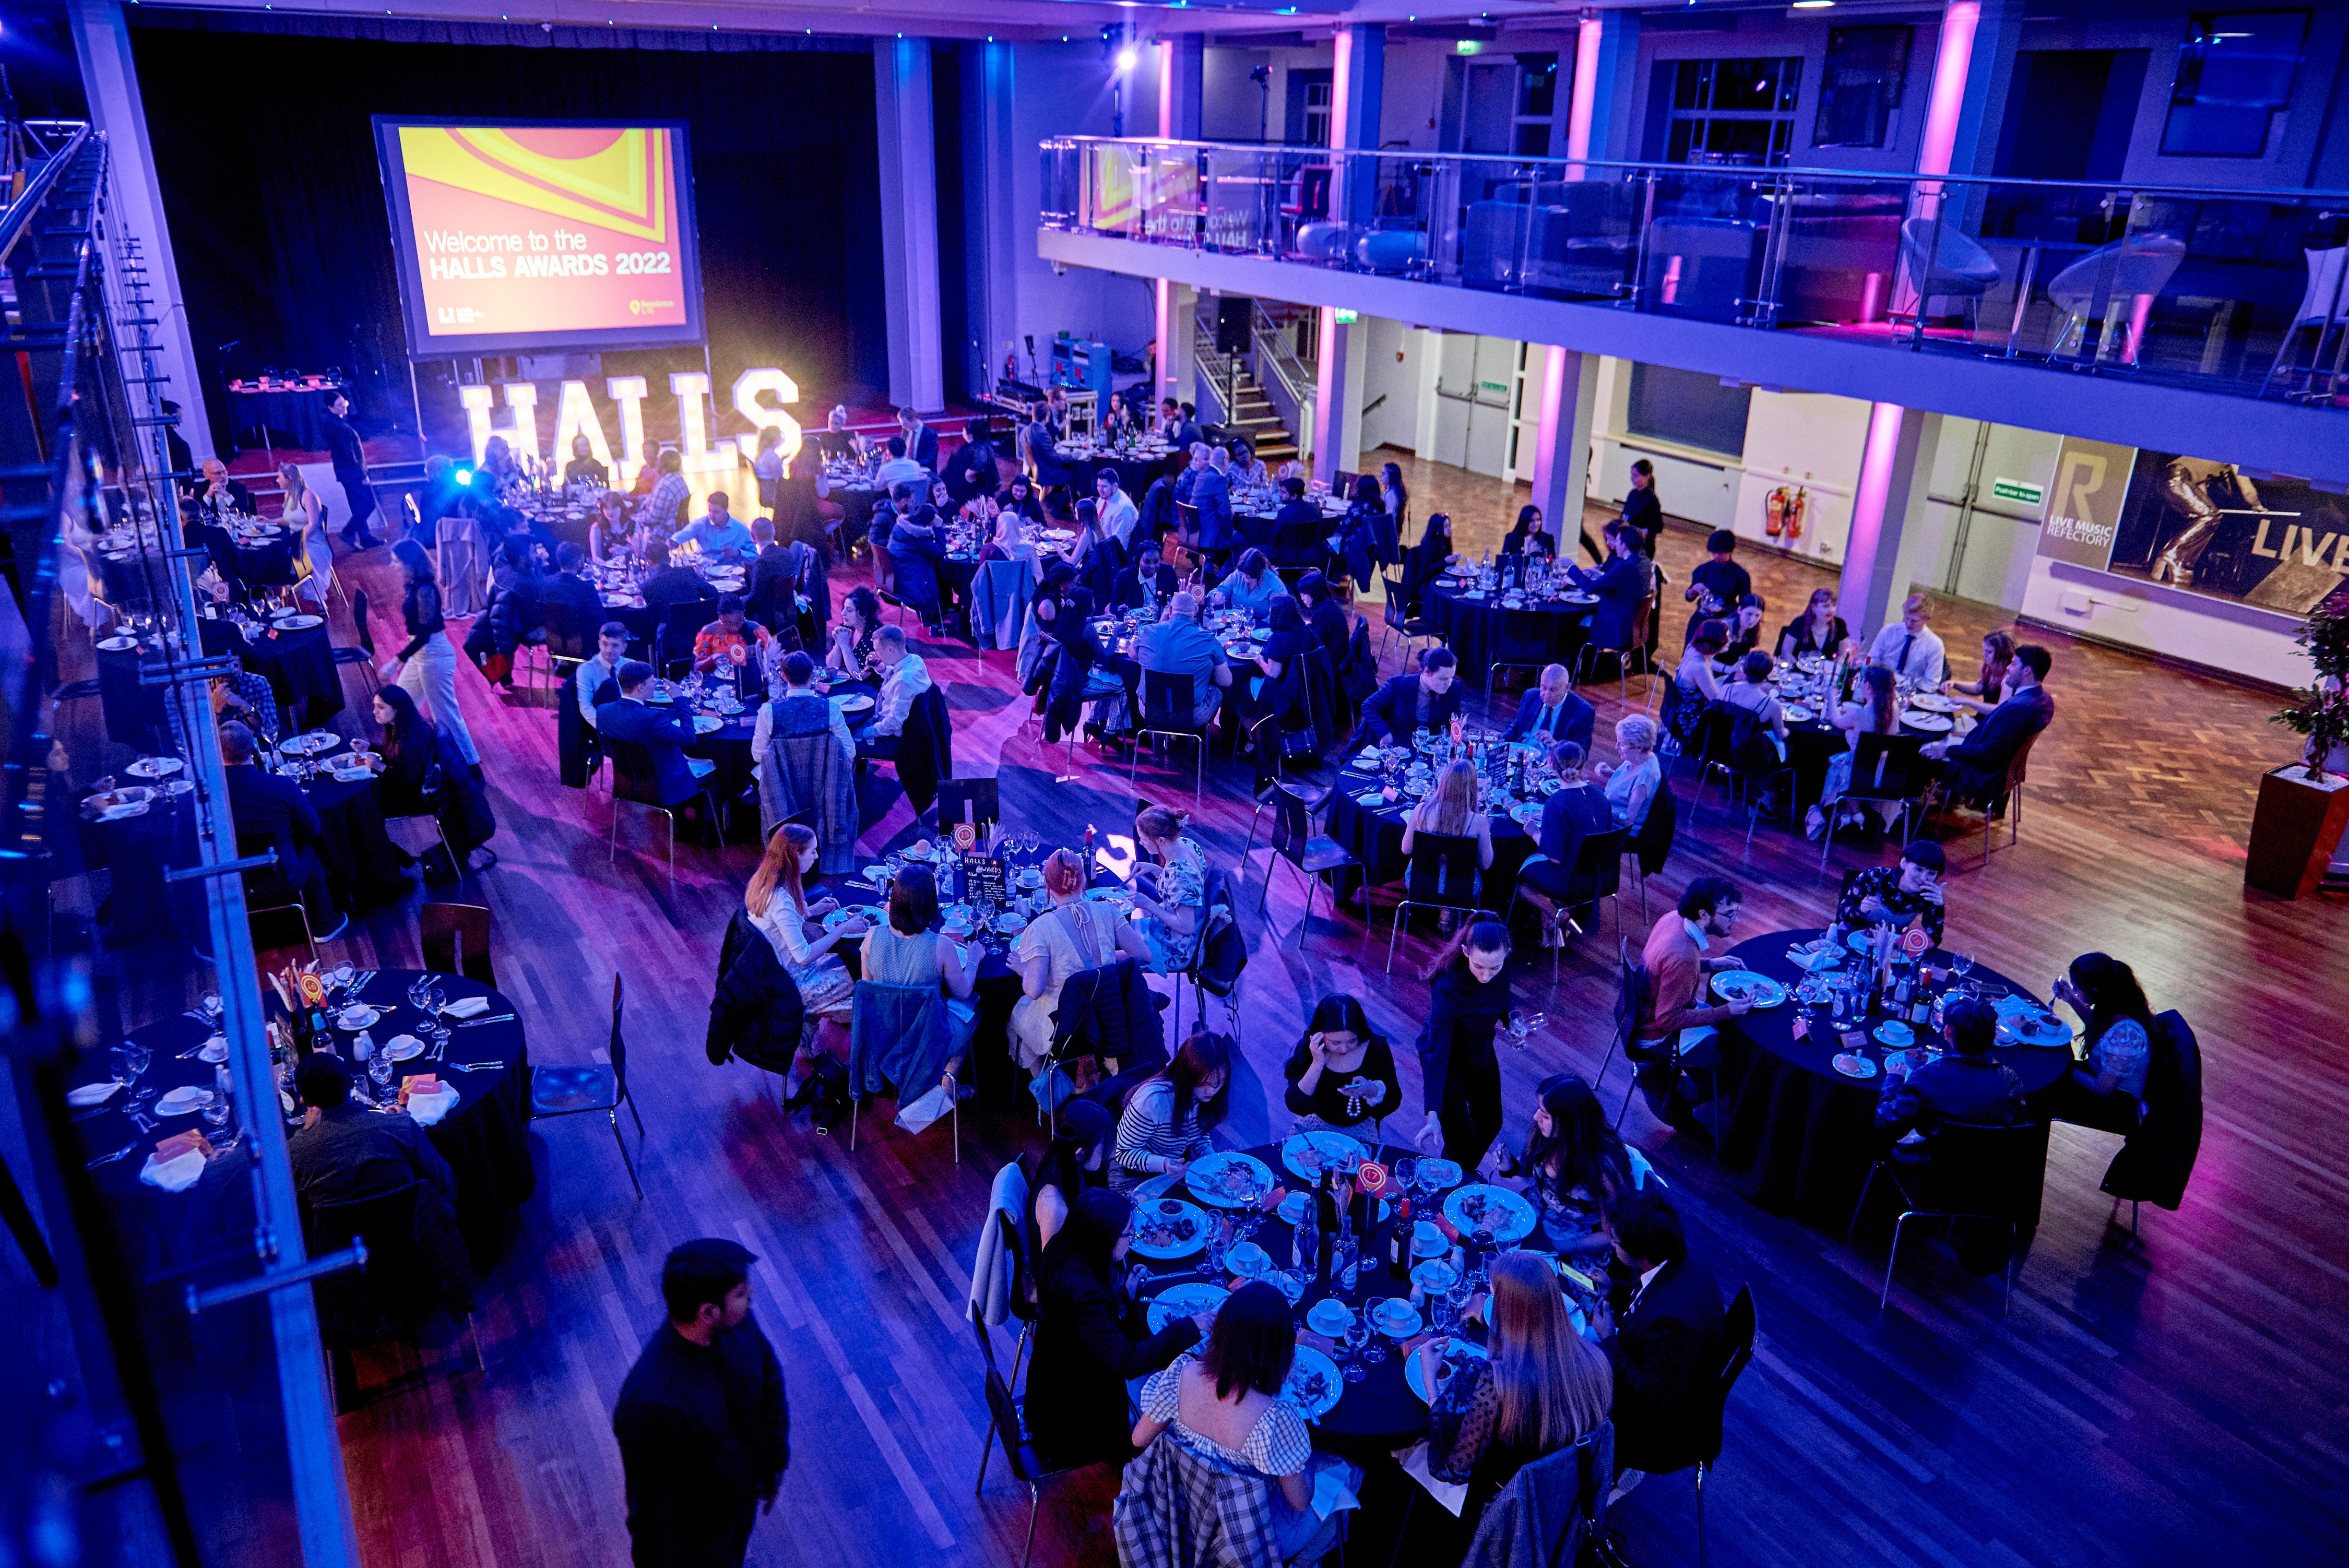 Halls Awards Winners Revealed